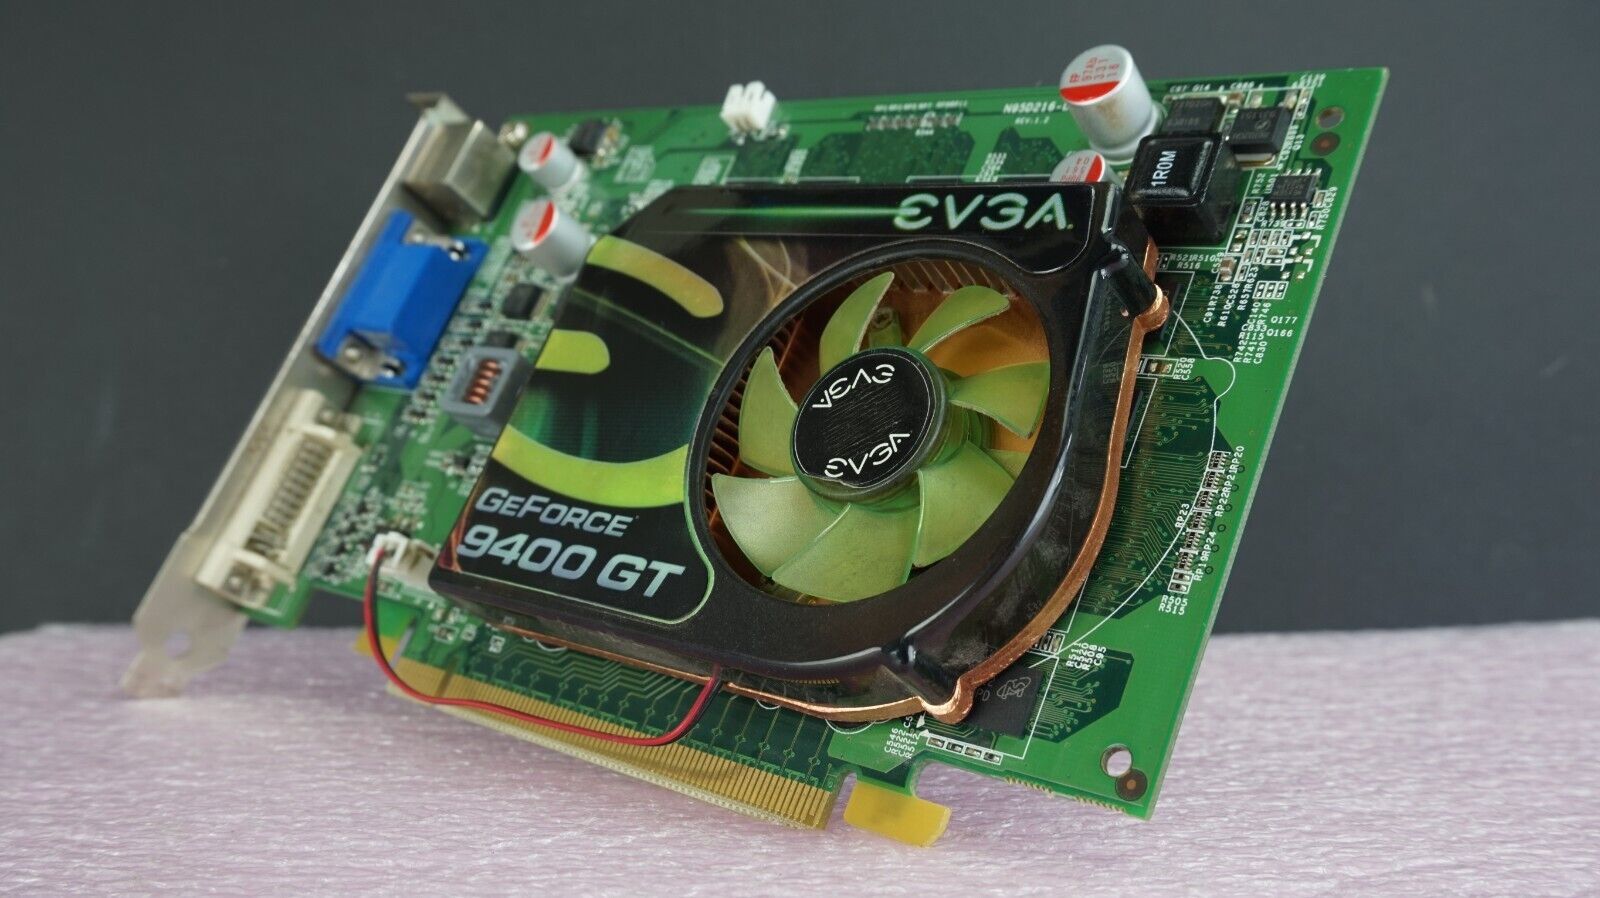 EVGA GeForce 9400 GT 512MB DDR2 SDRAM PCI-e Graphics Card